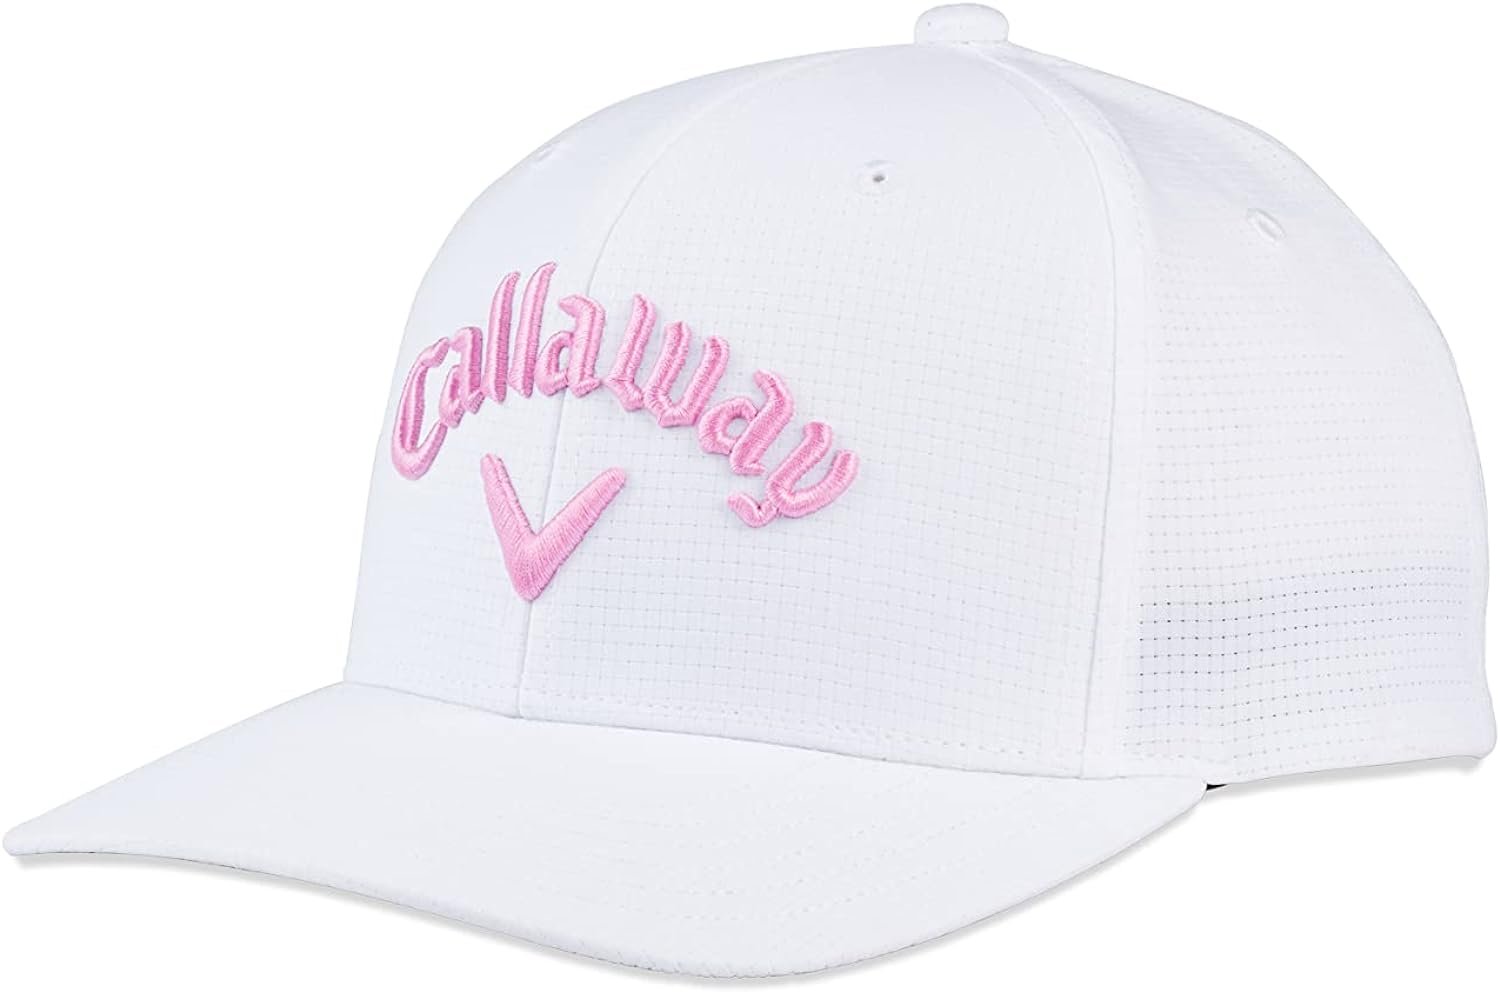 Callaway Golf 2023 Performance Pro Hat